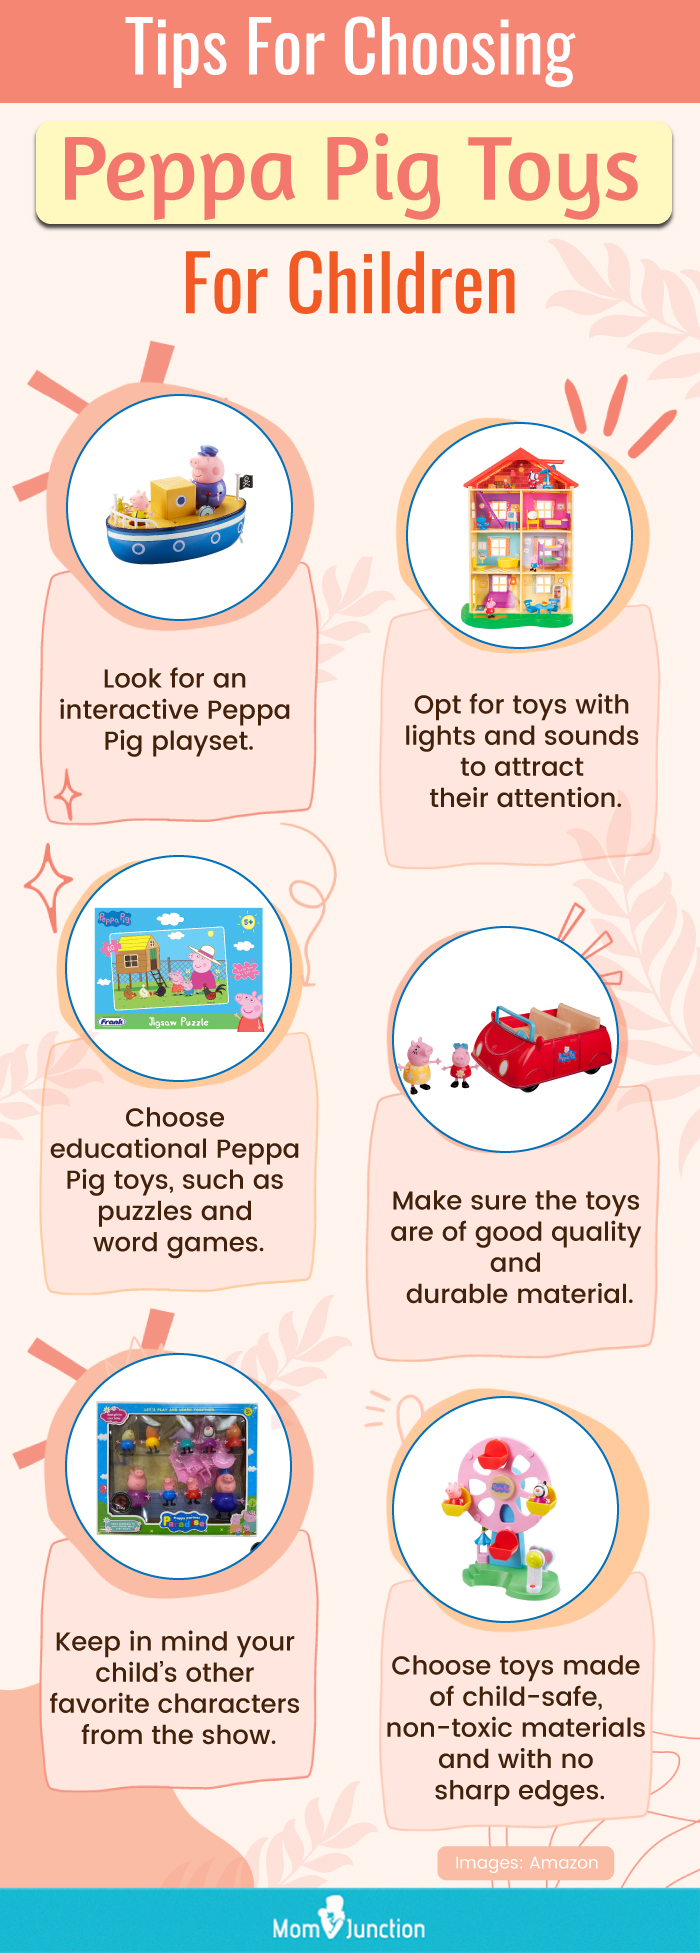 Tips For Choosing Peppa Pig Toys For Children (infographic)